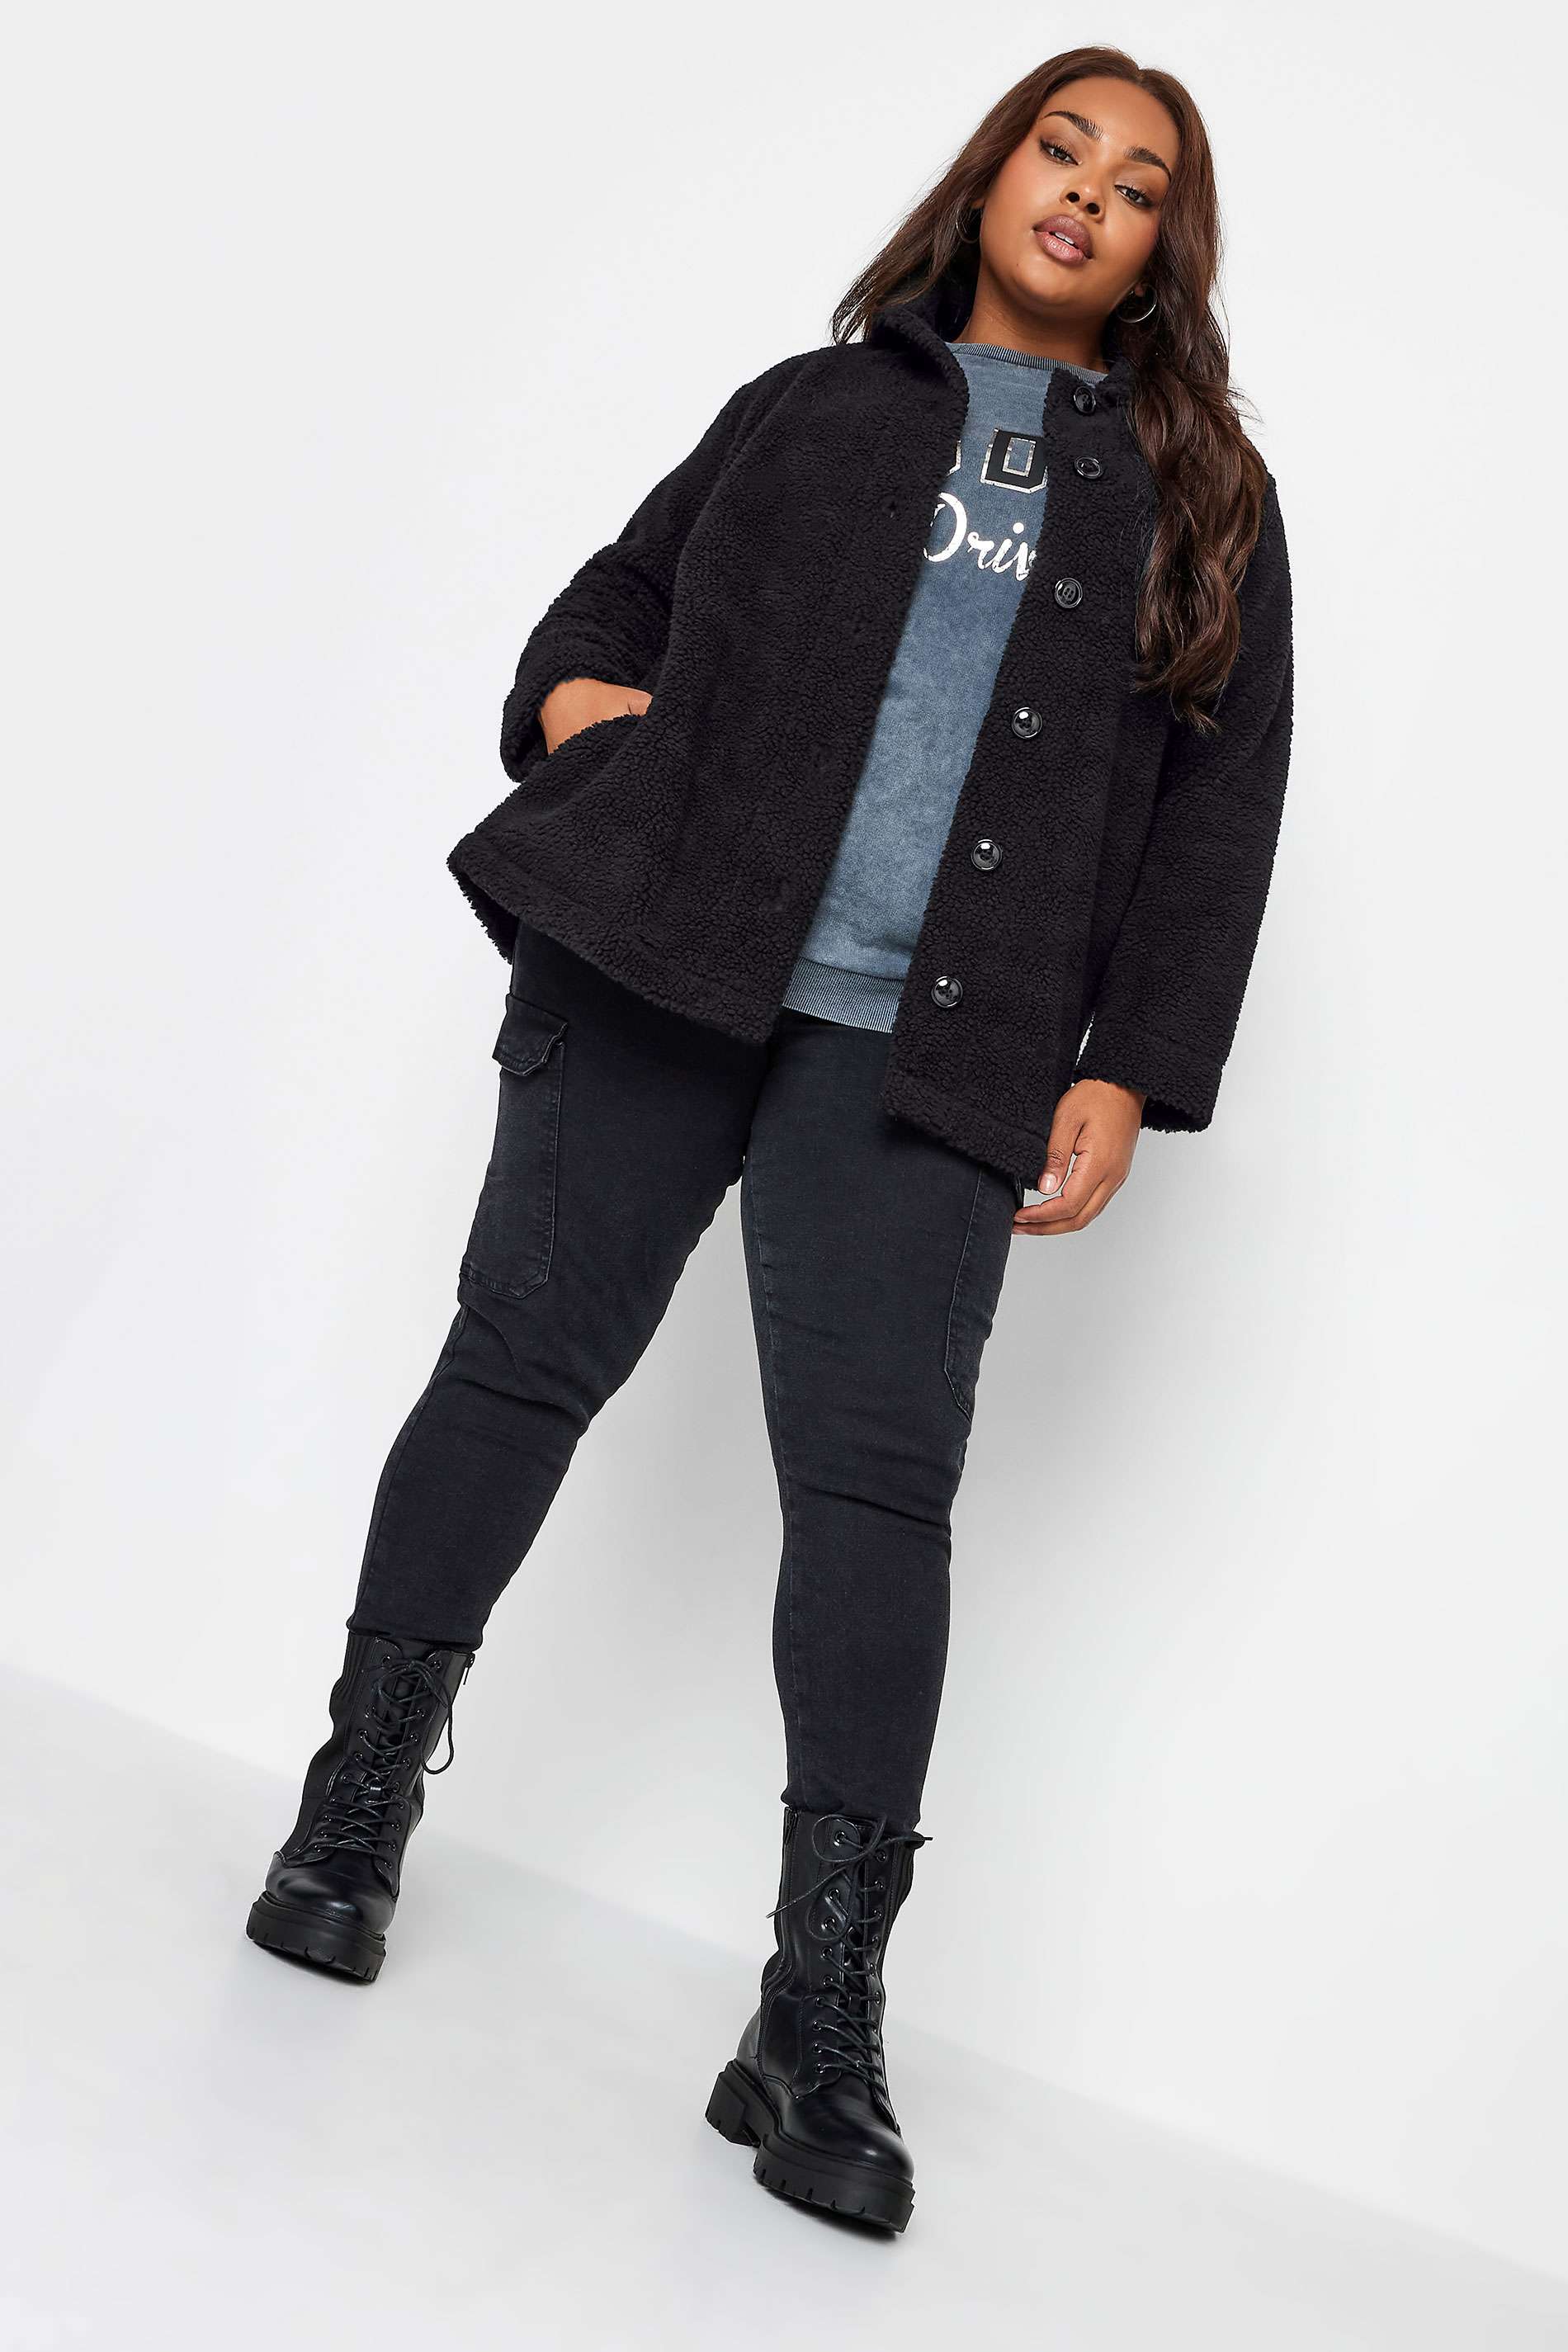 YOURS Plus Size Black Teddy Fleece Jacket | Yours Clothing 2